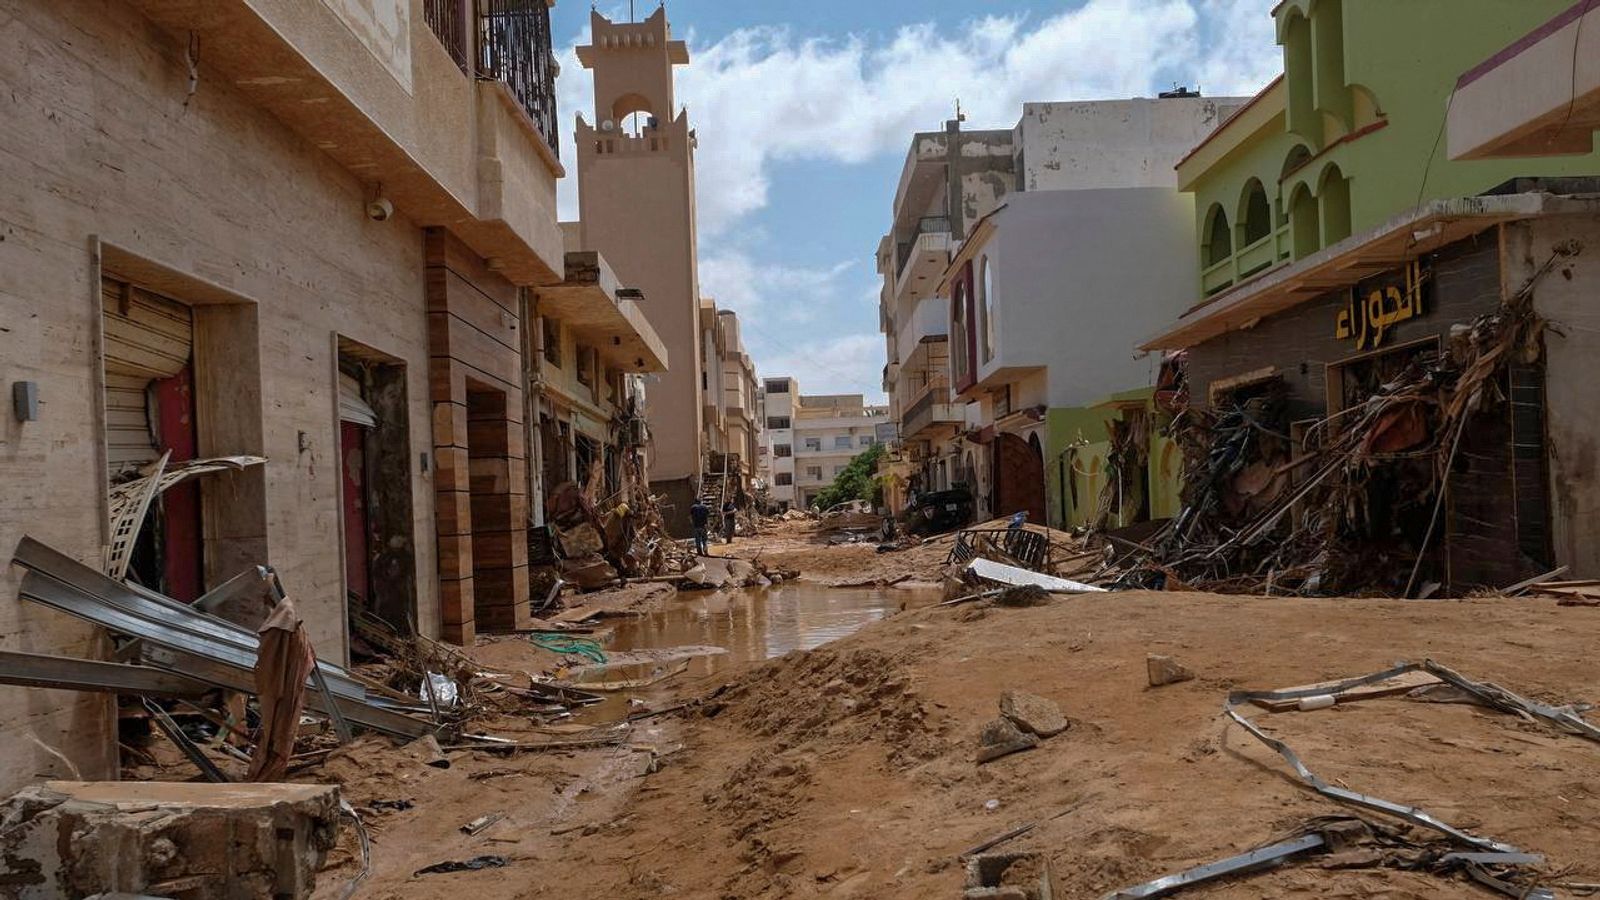 Libya flooding: More than 5,300 feared dead after dams burst